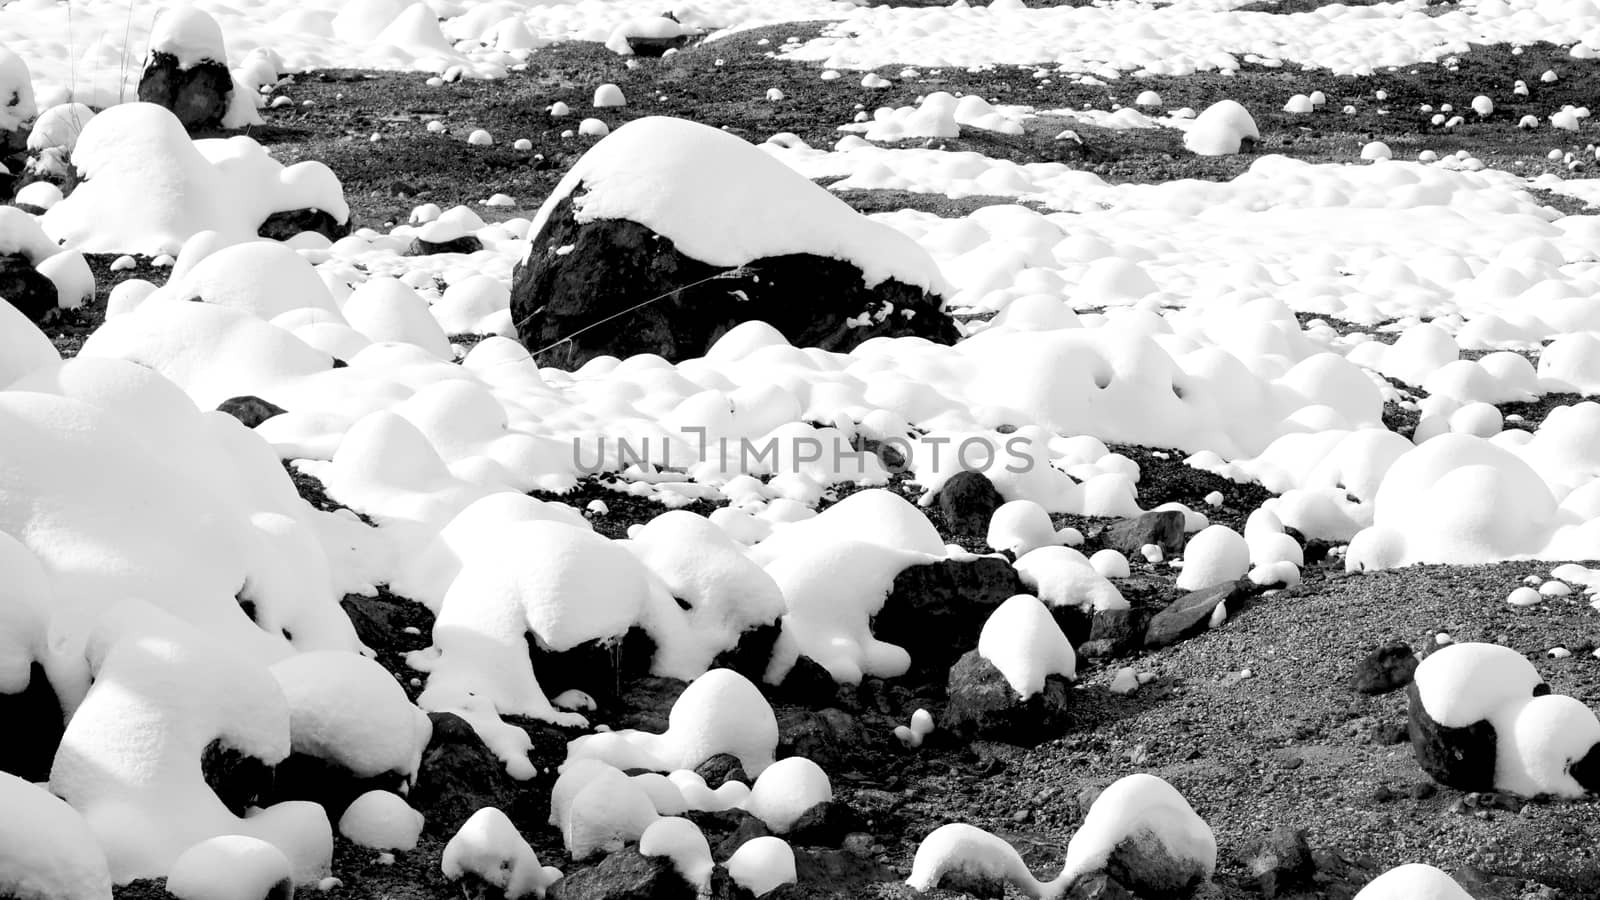 Closeup stone and snow monochrome in the mist Noboribetsu onsen snow winter national park in Jigokudani, Hokkaido, Japan